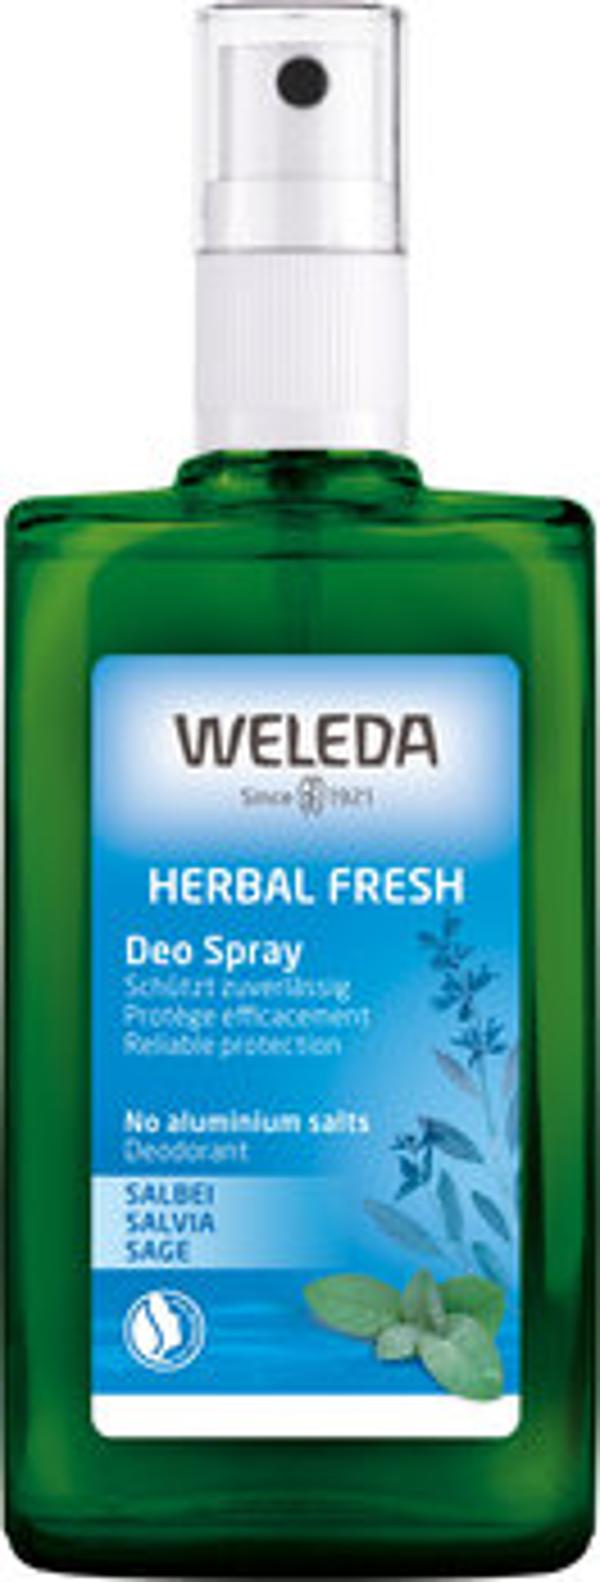 Produktfoto zu Salbei Deo Spray